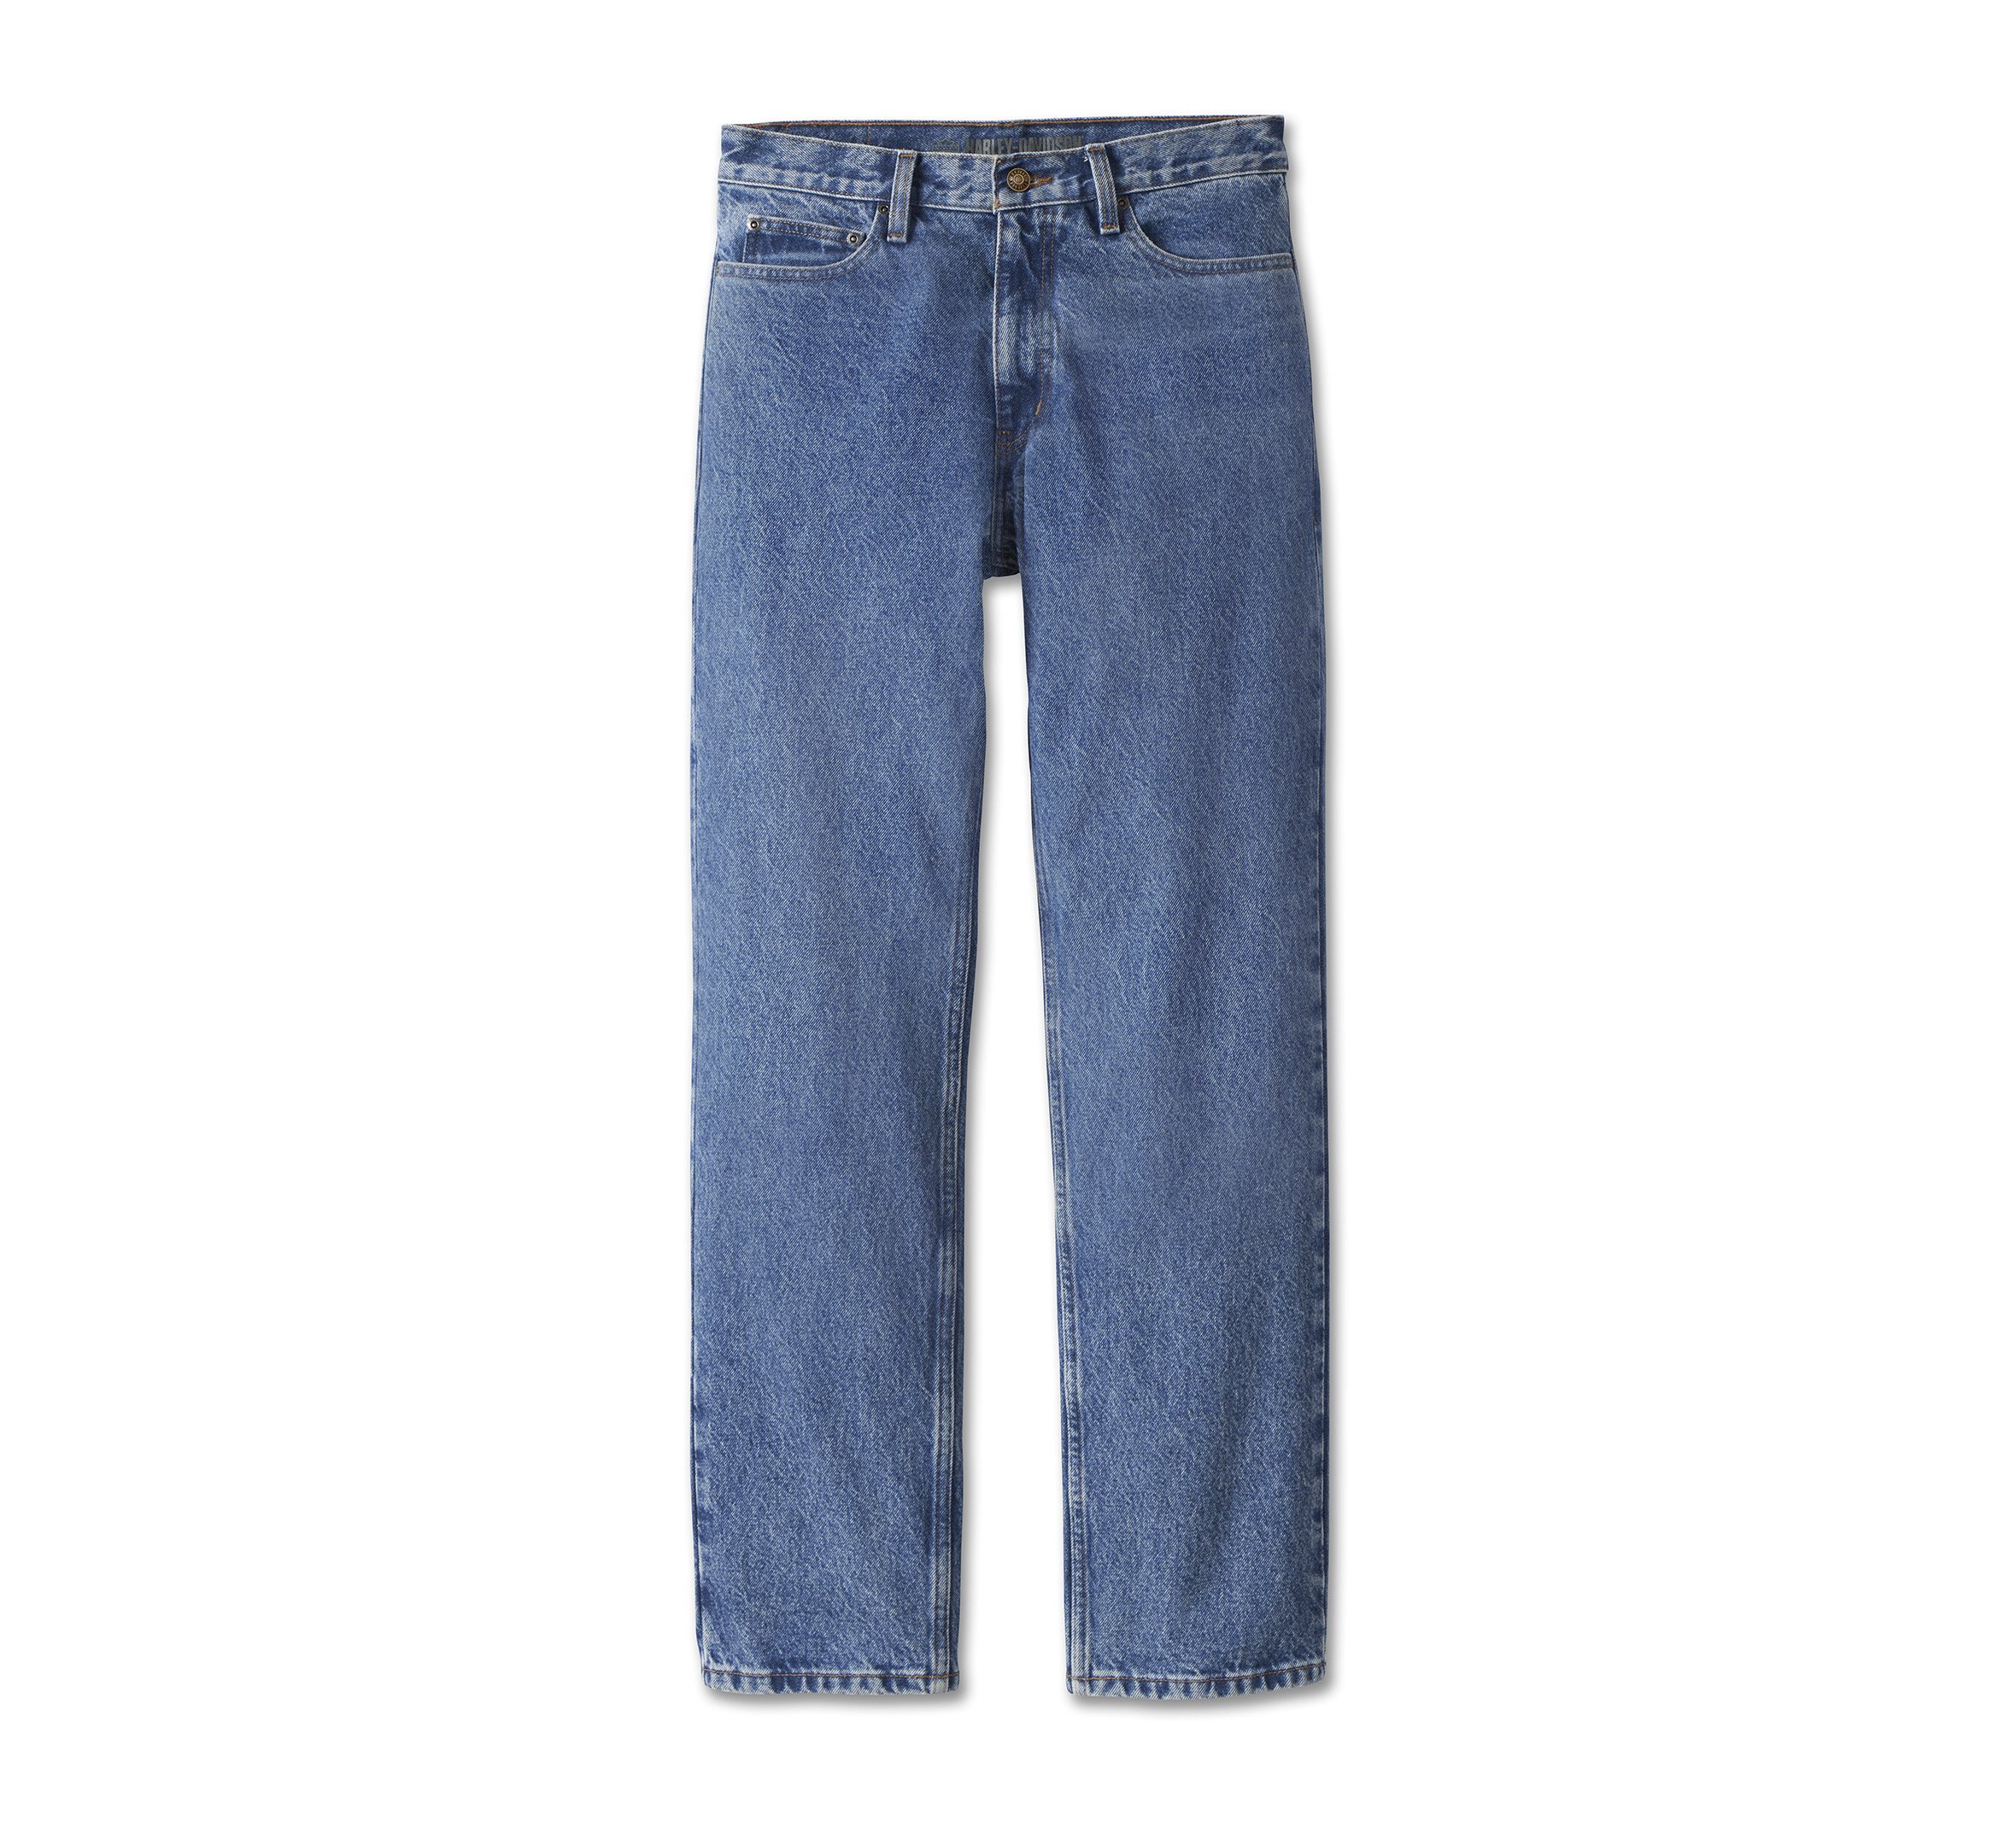 Gap Womens Blue Denim Jeans Size 31 - beyond exchange